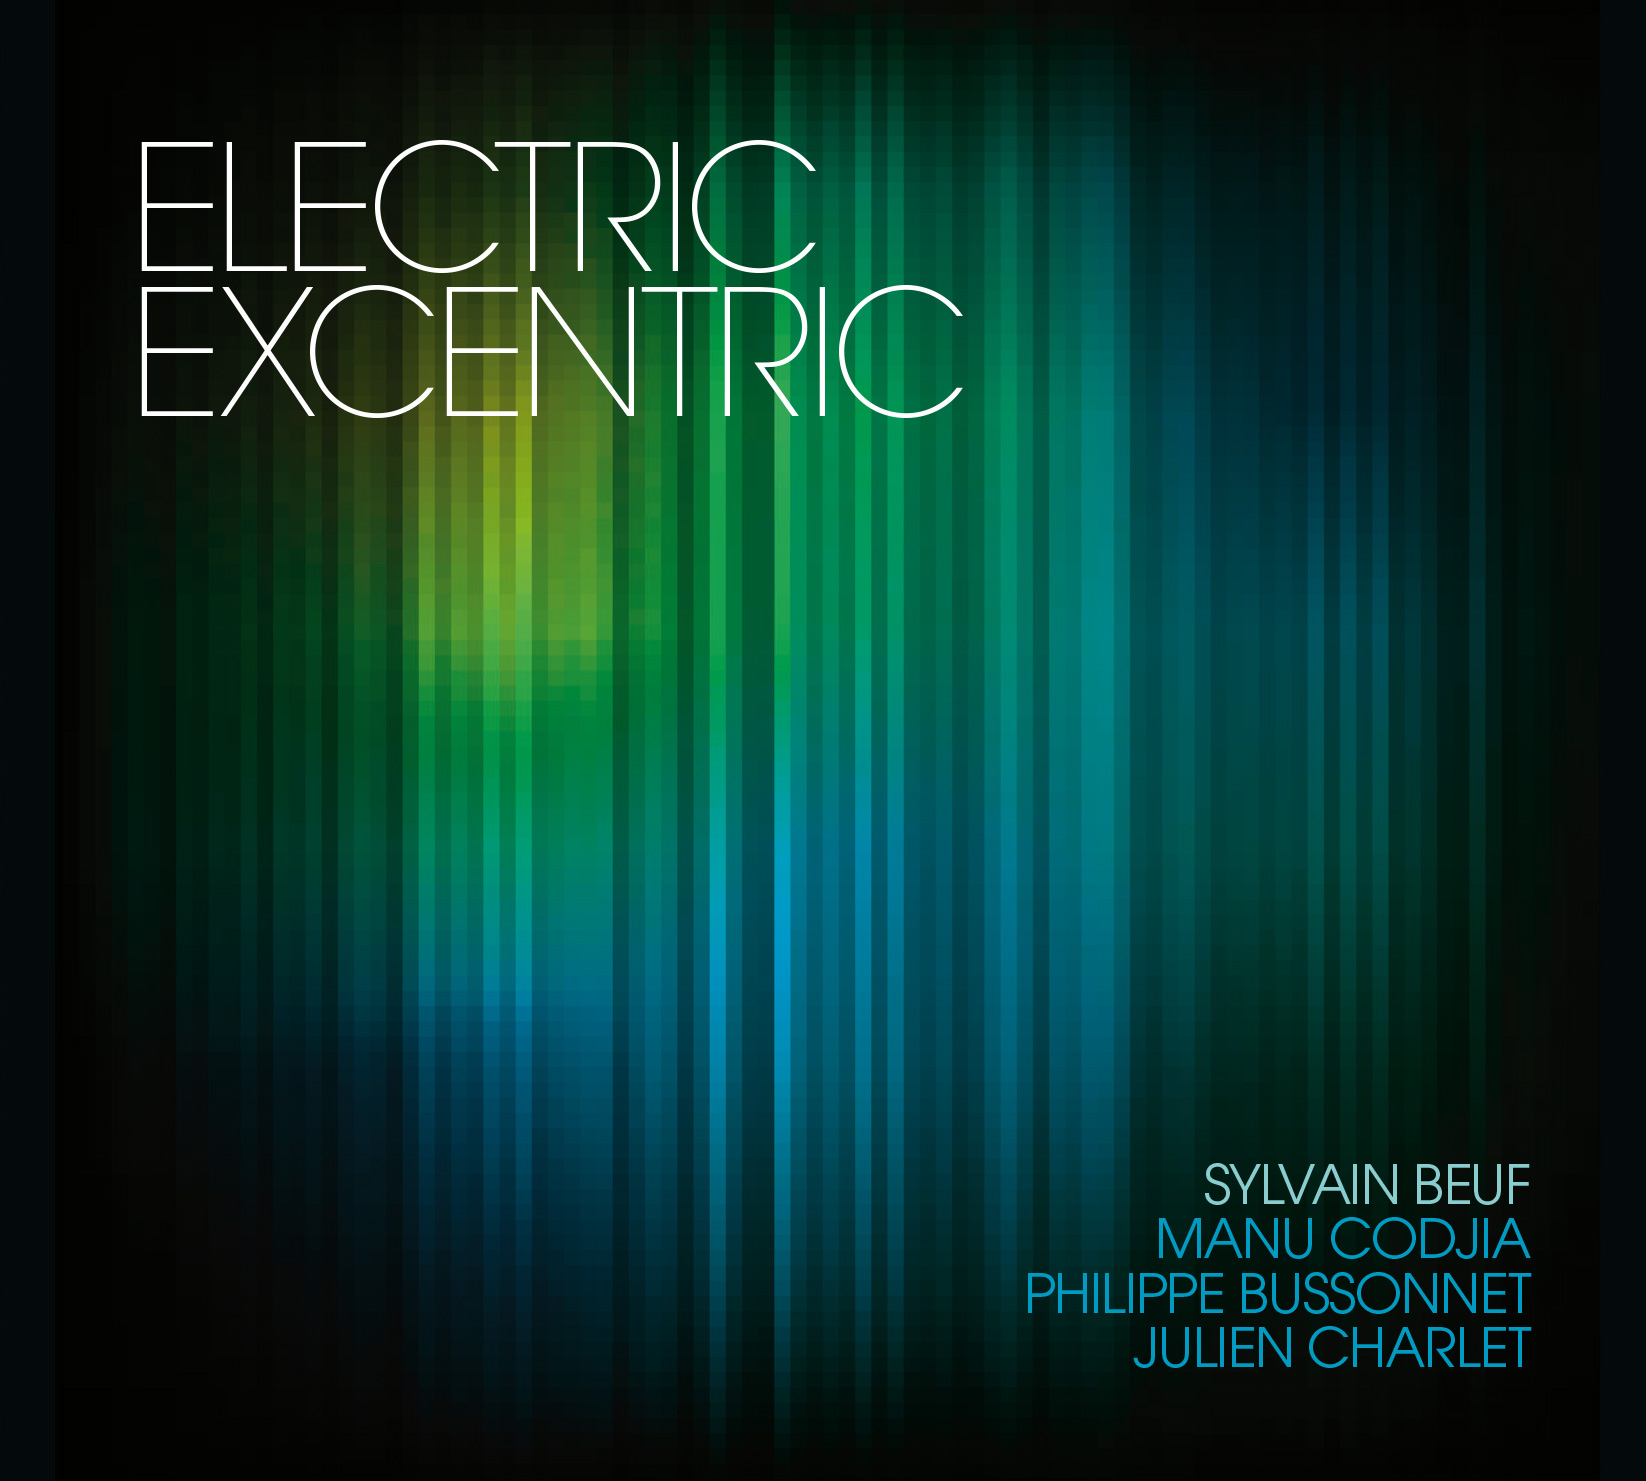 ElectricExcentric-SylvainBeuf-Img1